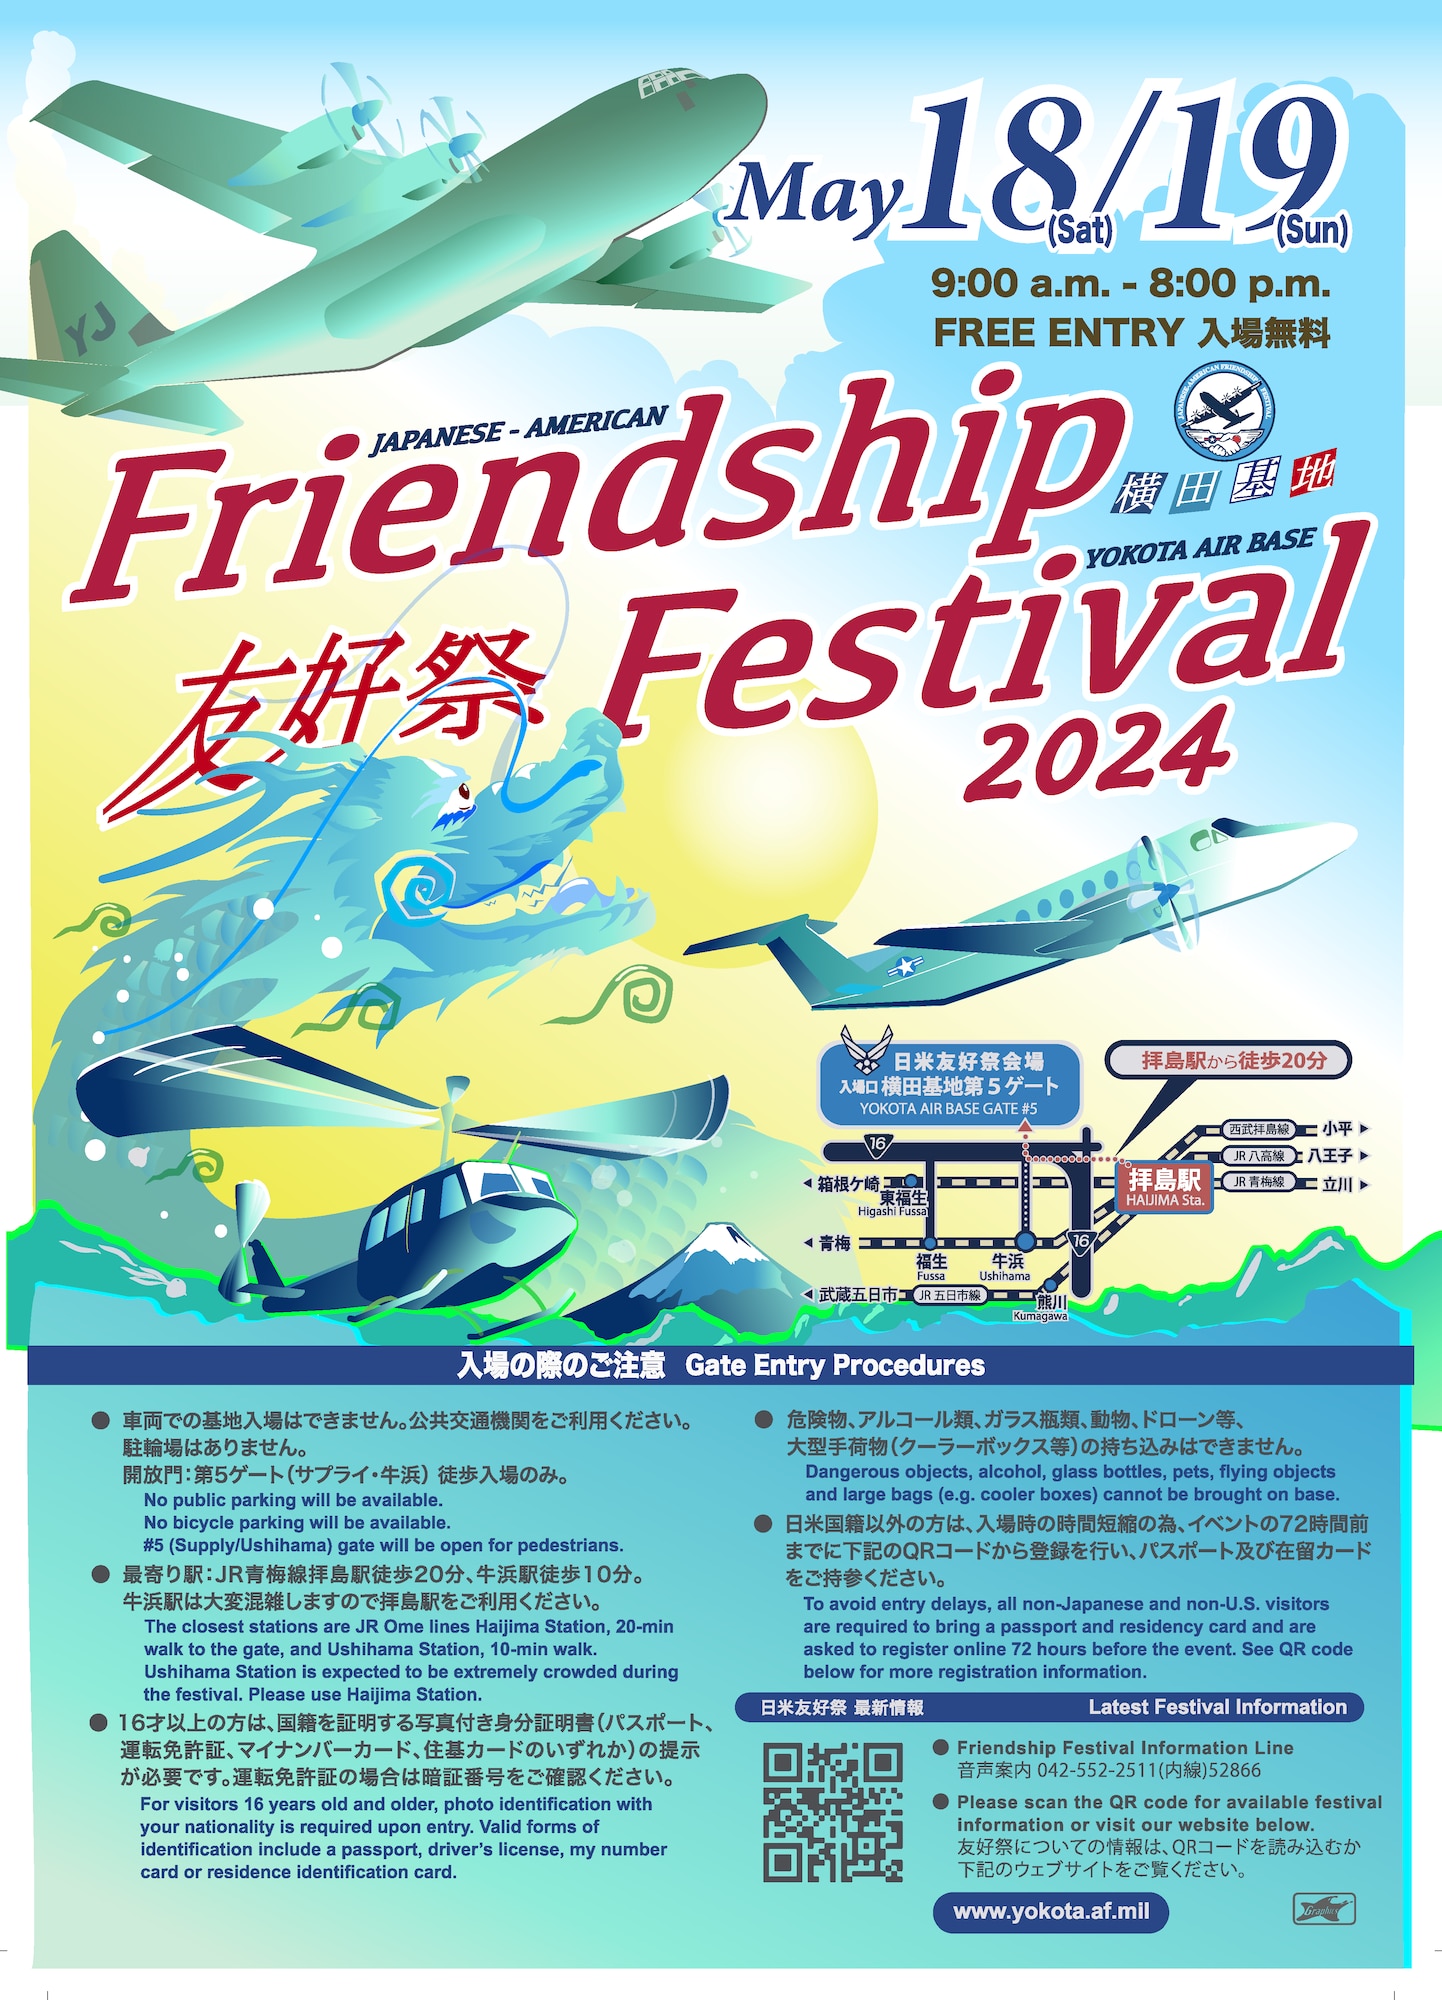 A graphic depicting Yokota Air Base's 2024 Japanese-American Friendship Festival information.